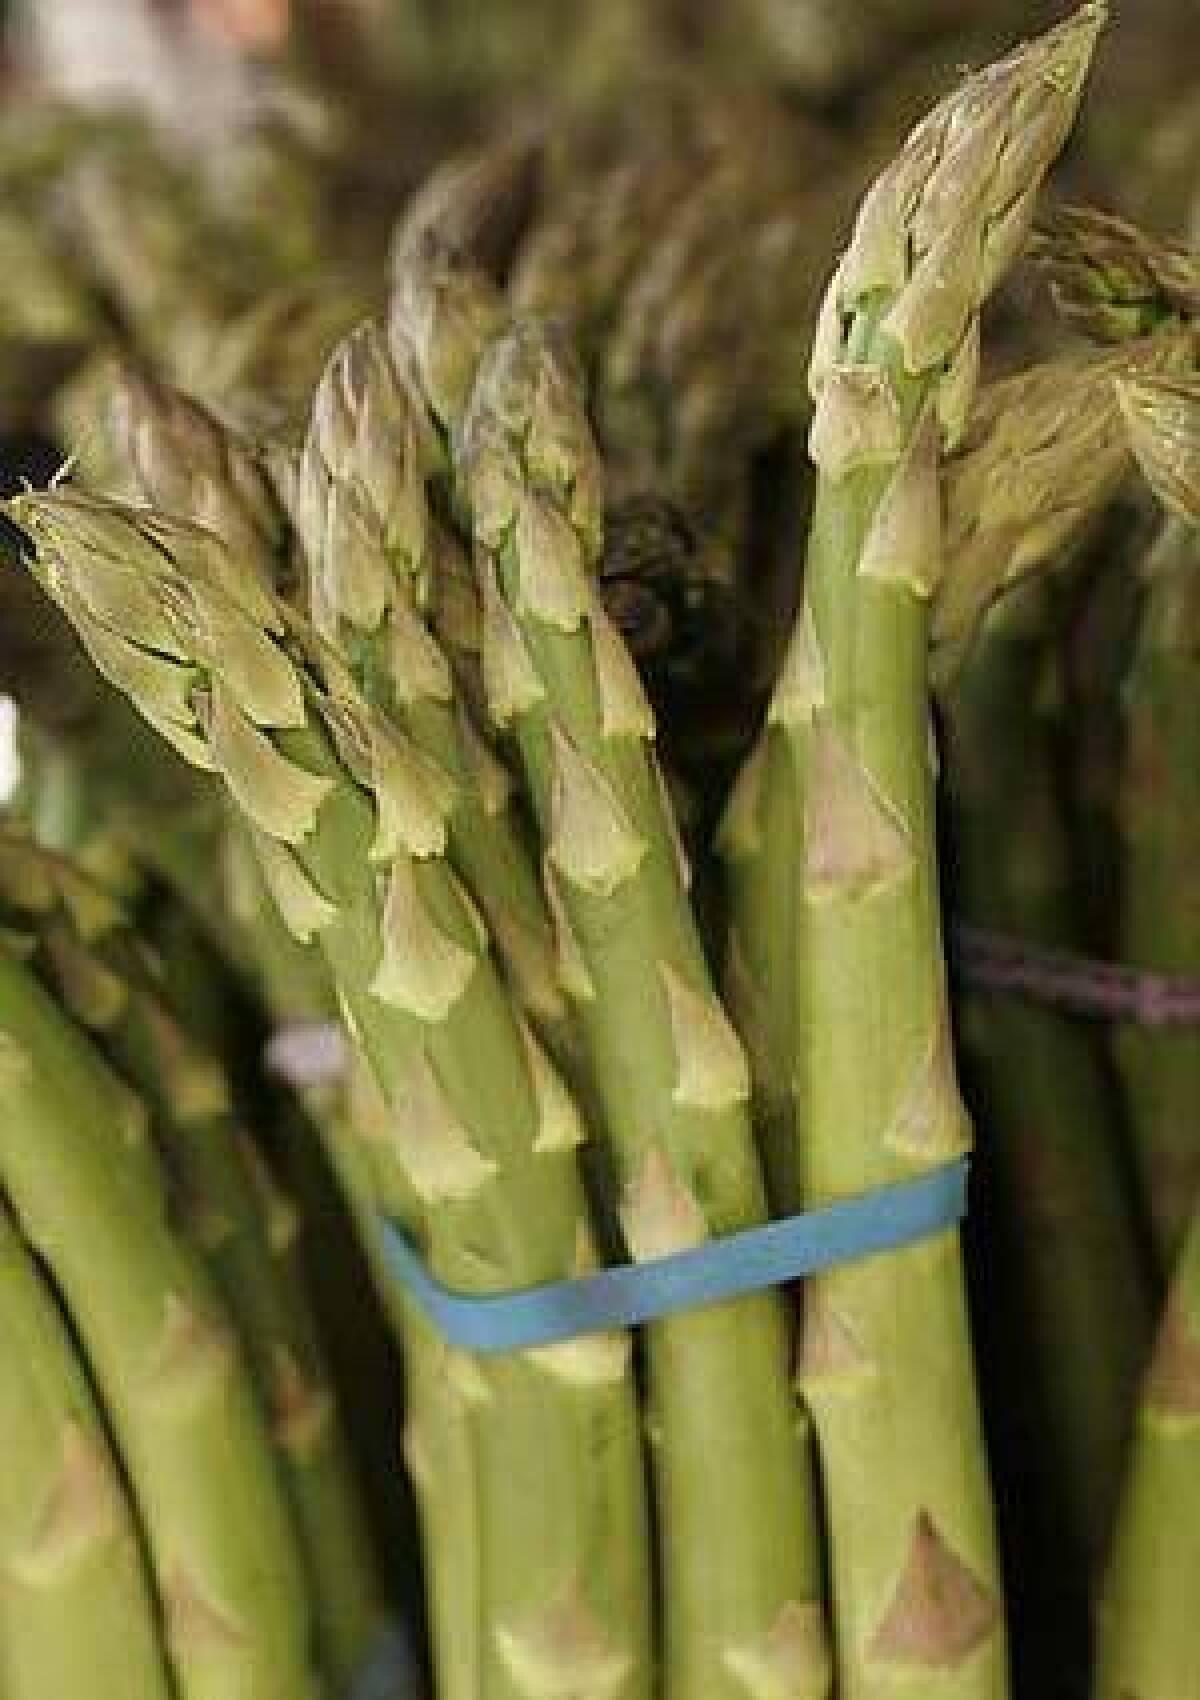 SEASONAL: Jumbo asparagus at the Santa Monica farmers market.